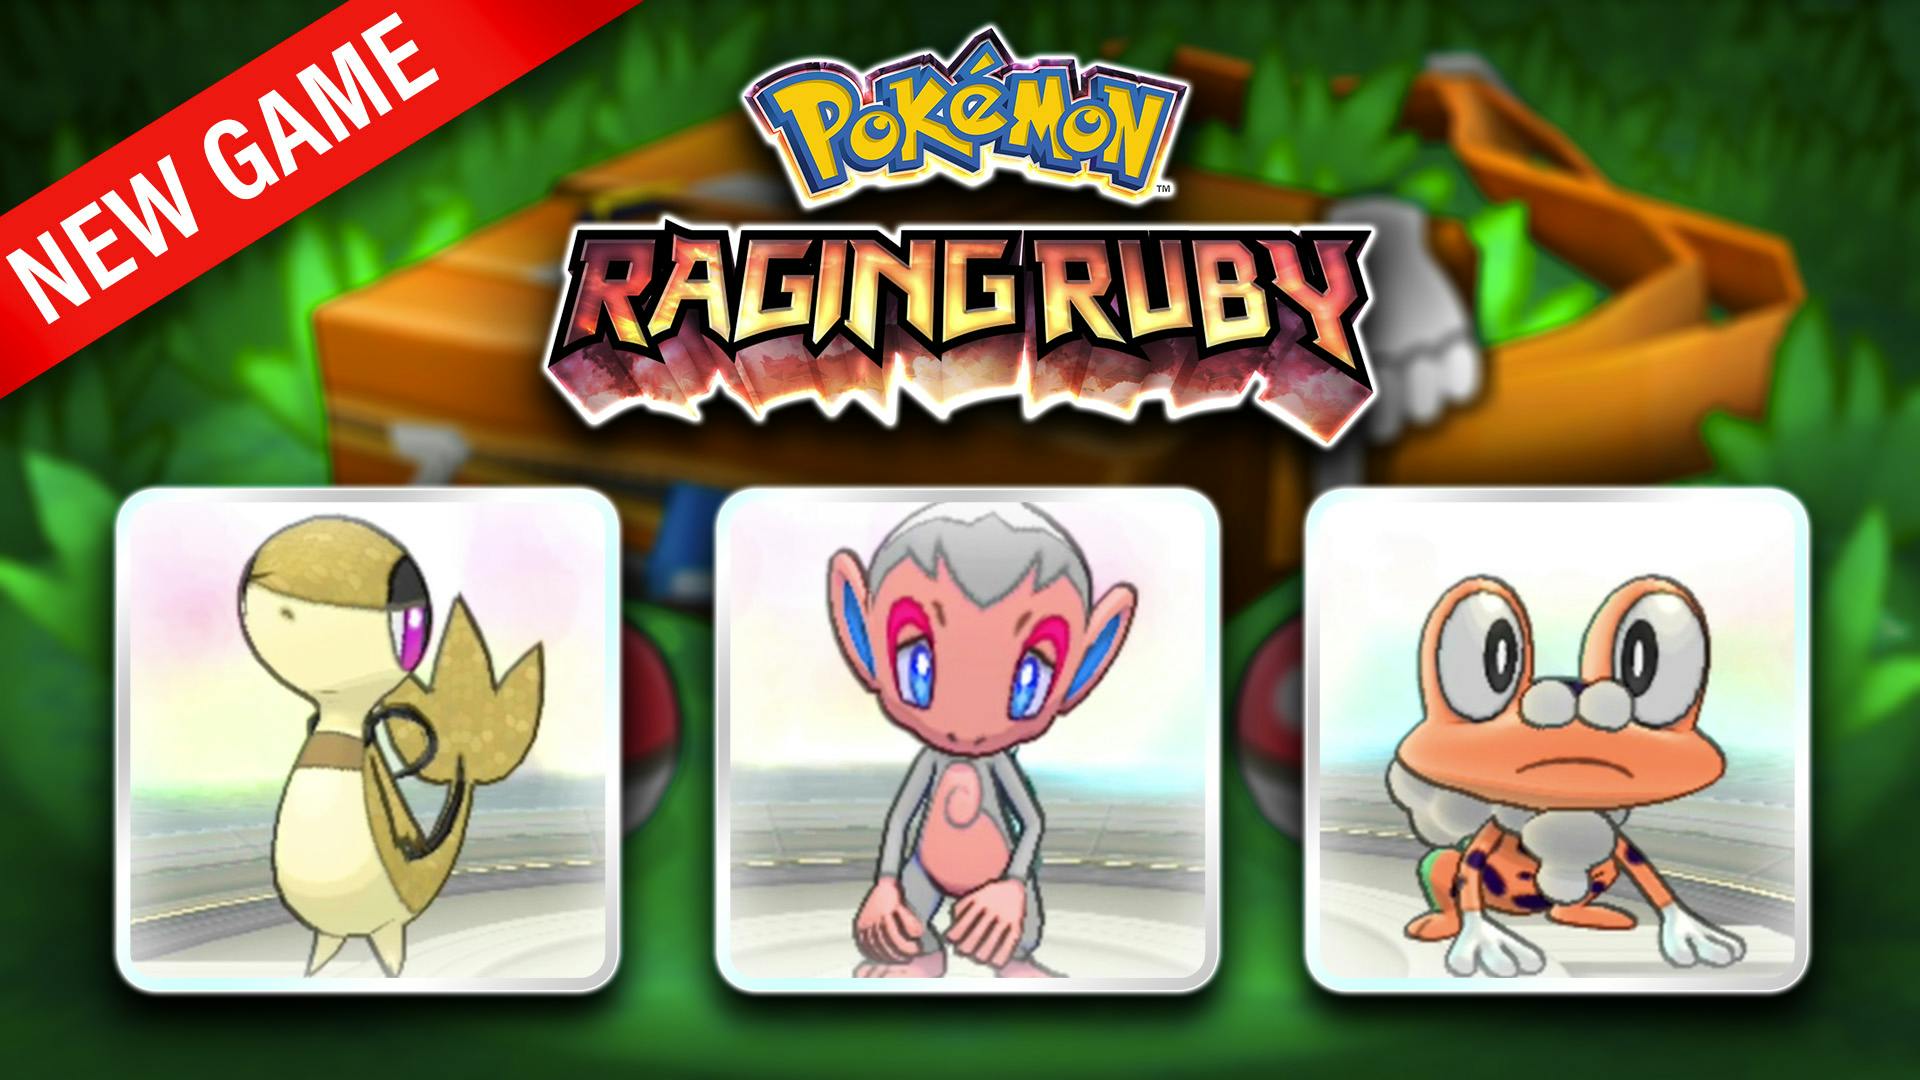 Pokemon Raging Ruby Banner Image